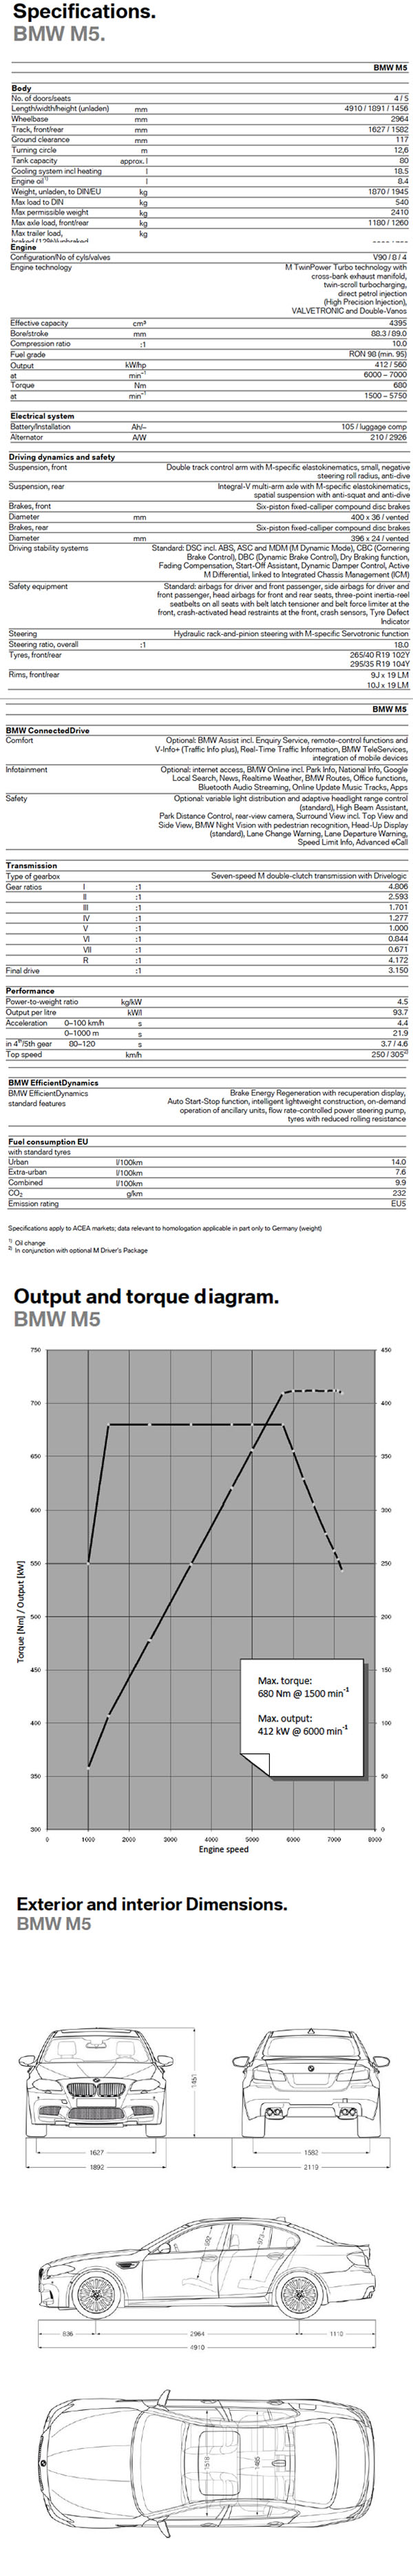 2012 BMW M5 spec sheet